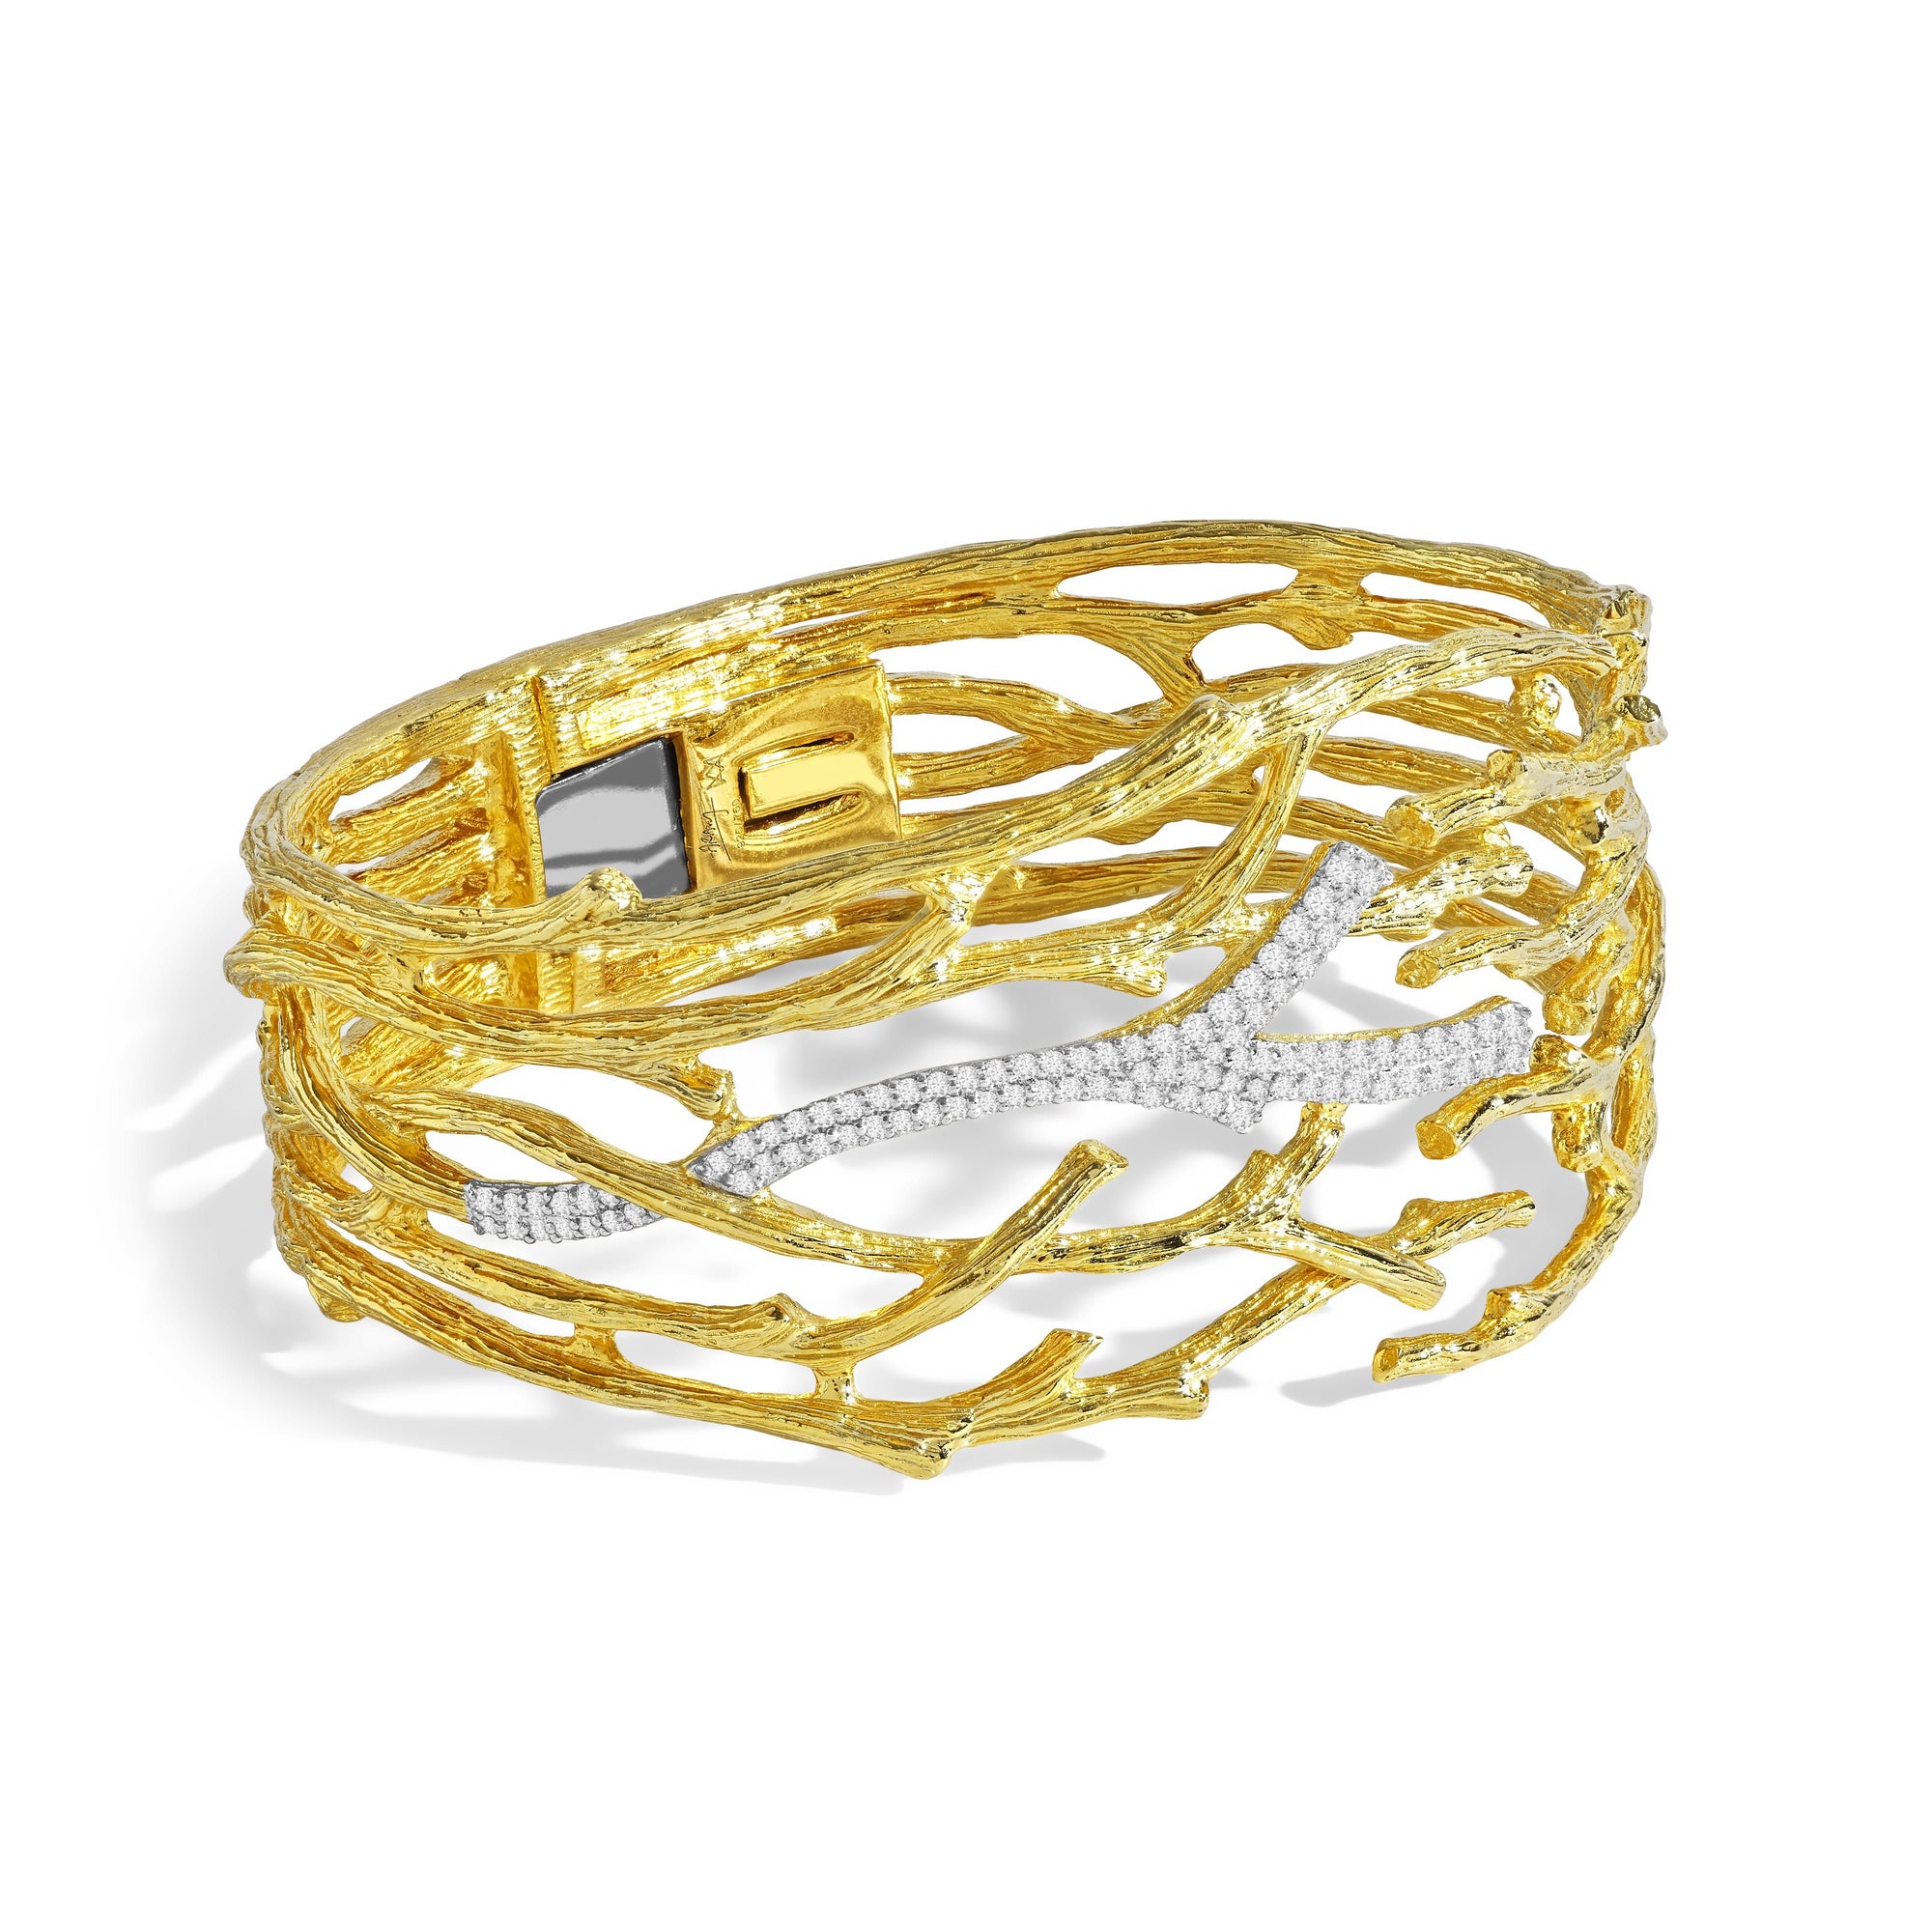 Michael Aram Enchanted Forest Cuff Bracelet with Diamonds